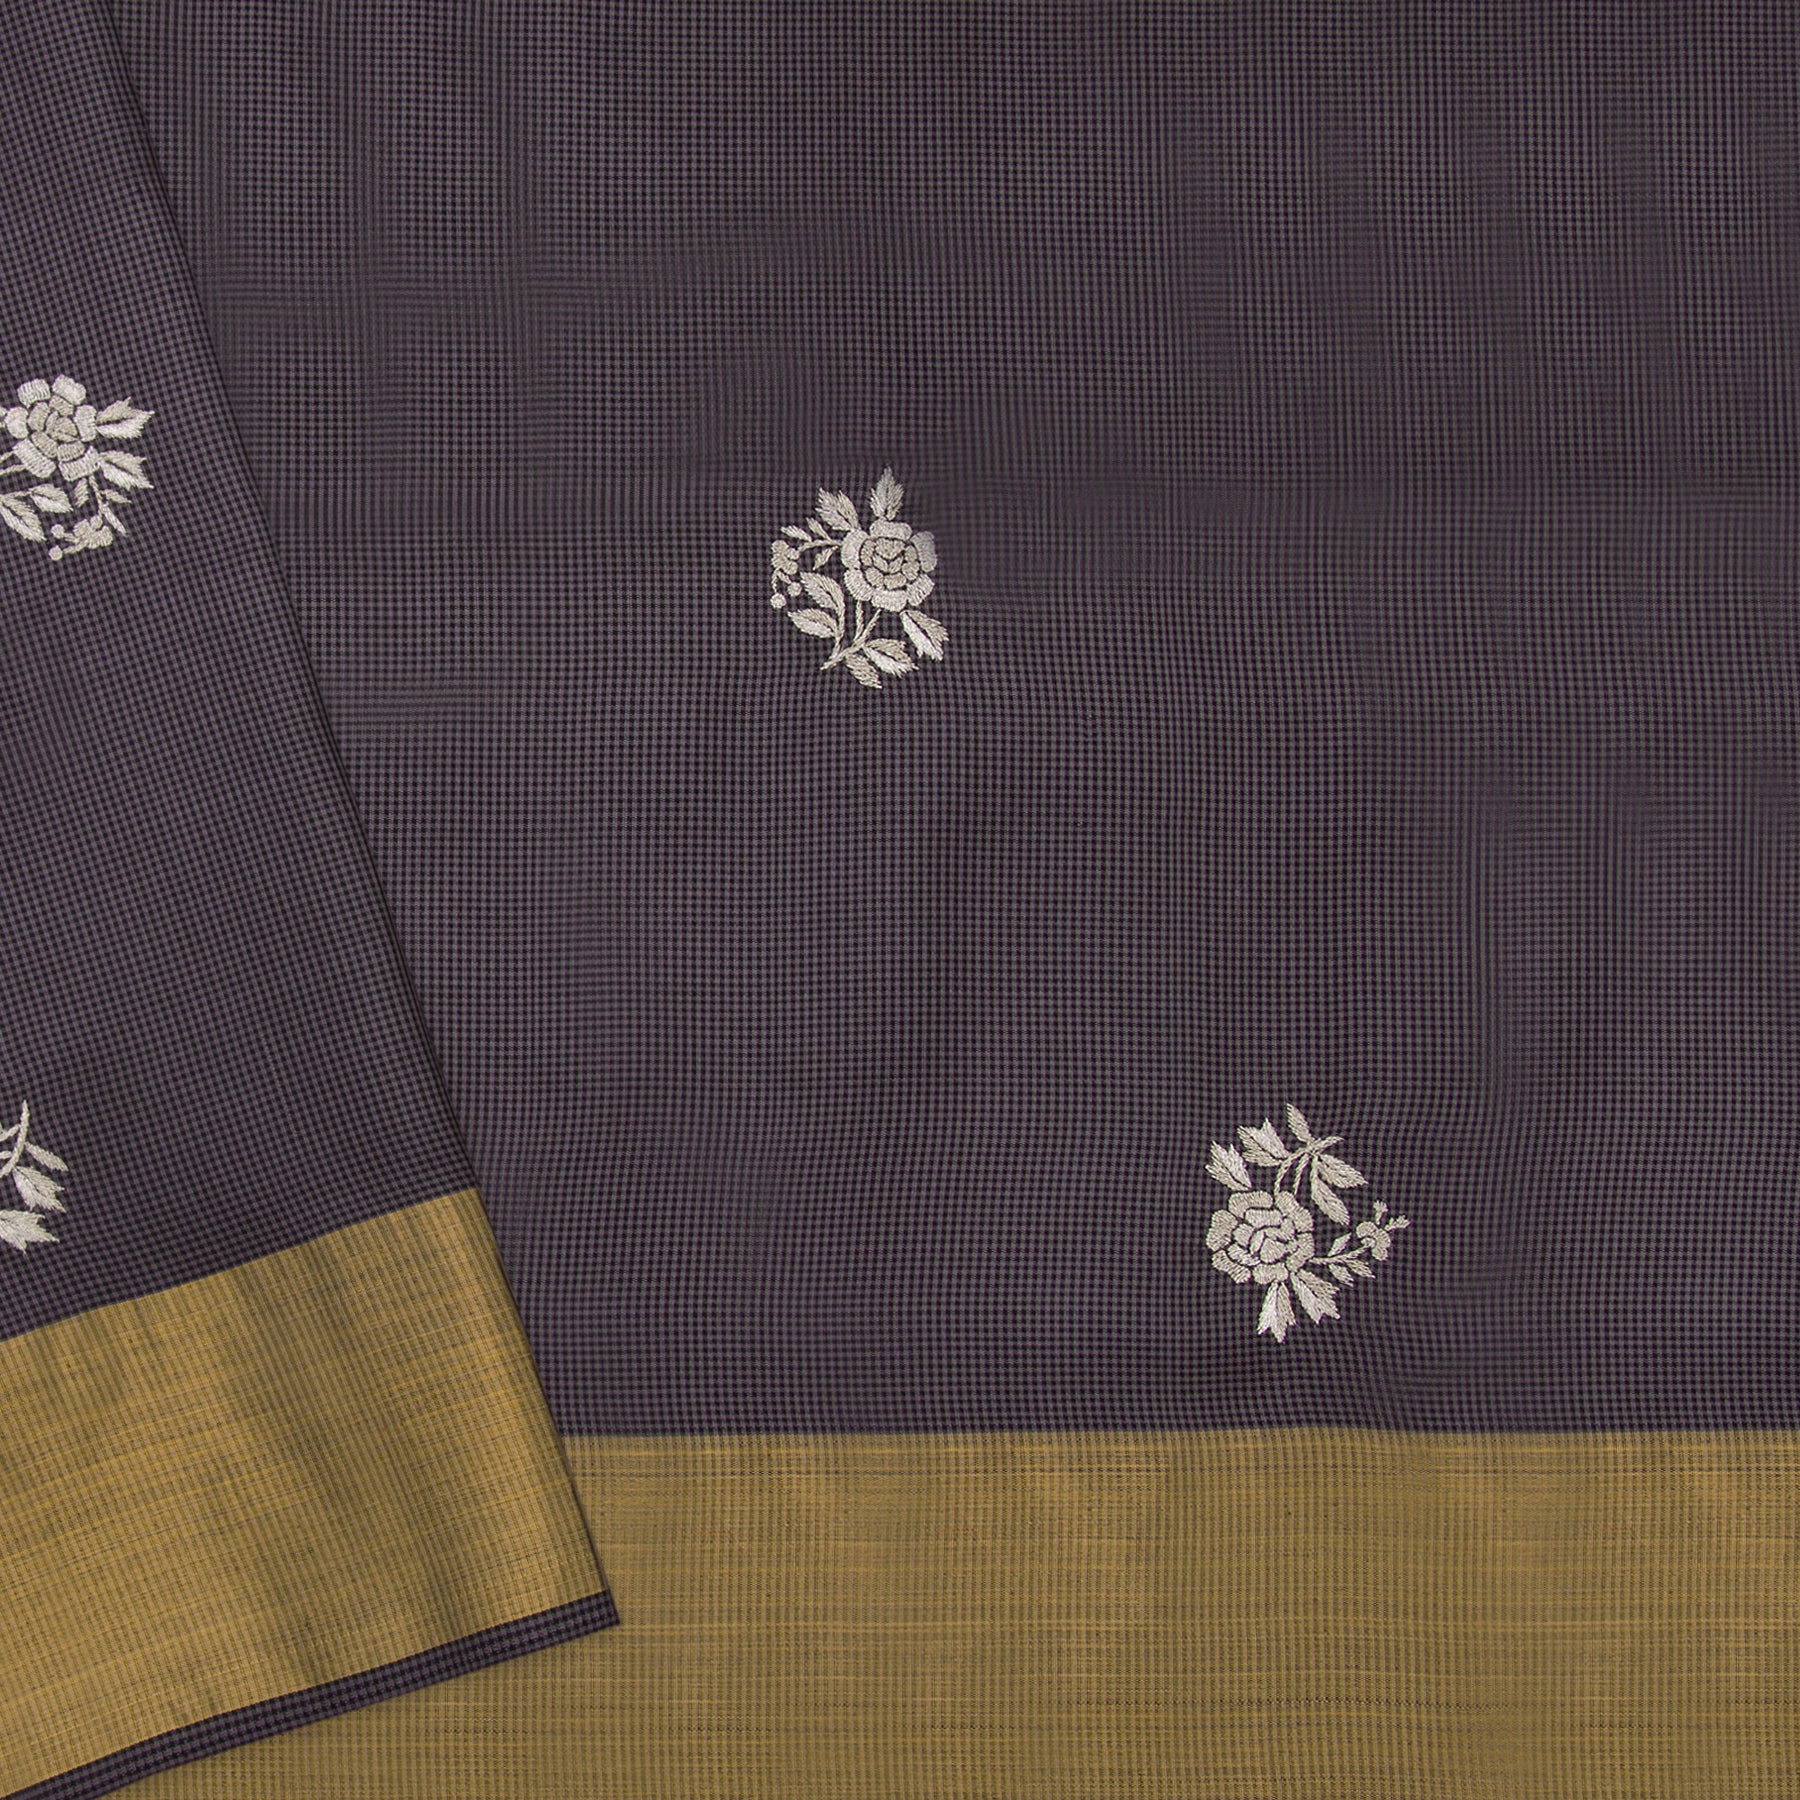 Kanakavalli X Ashdeen Kanjivaram Silk Sari 19-050-HS001-01644 - Blouse View